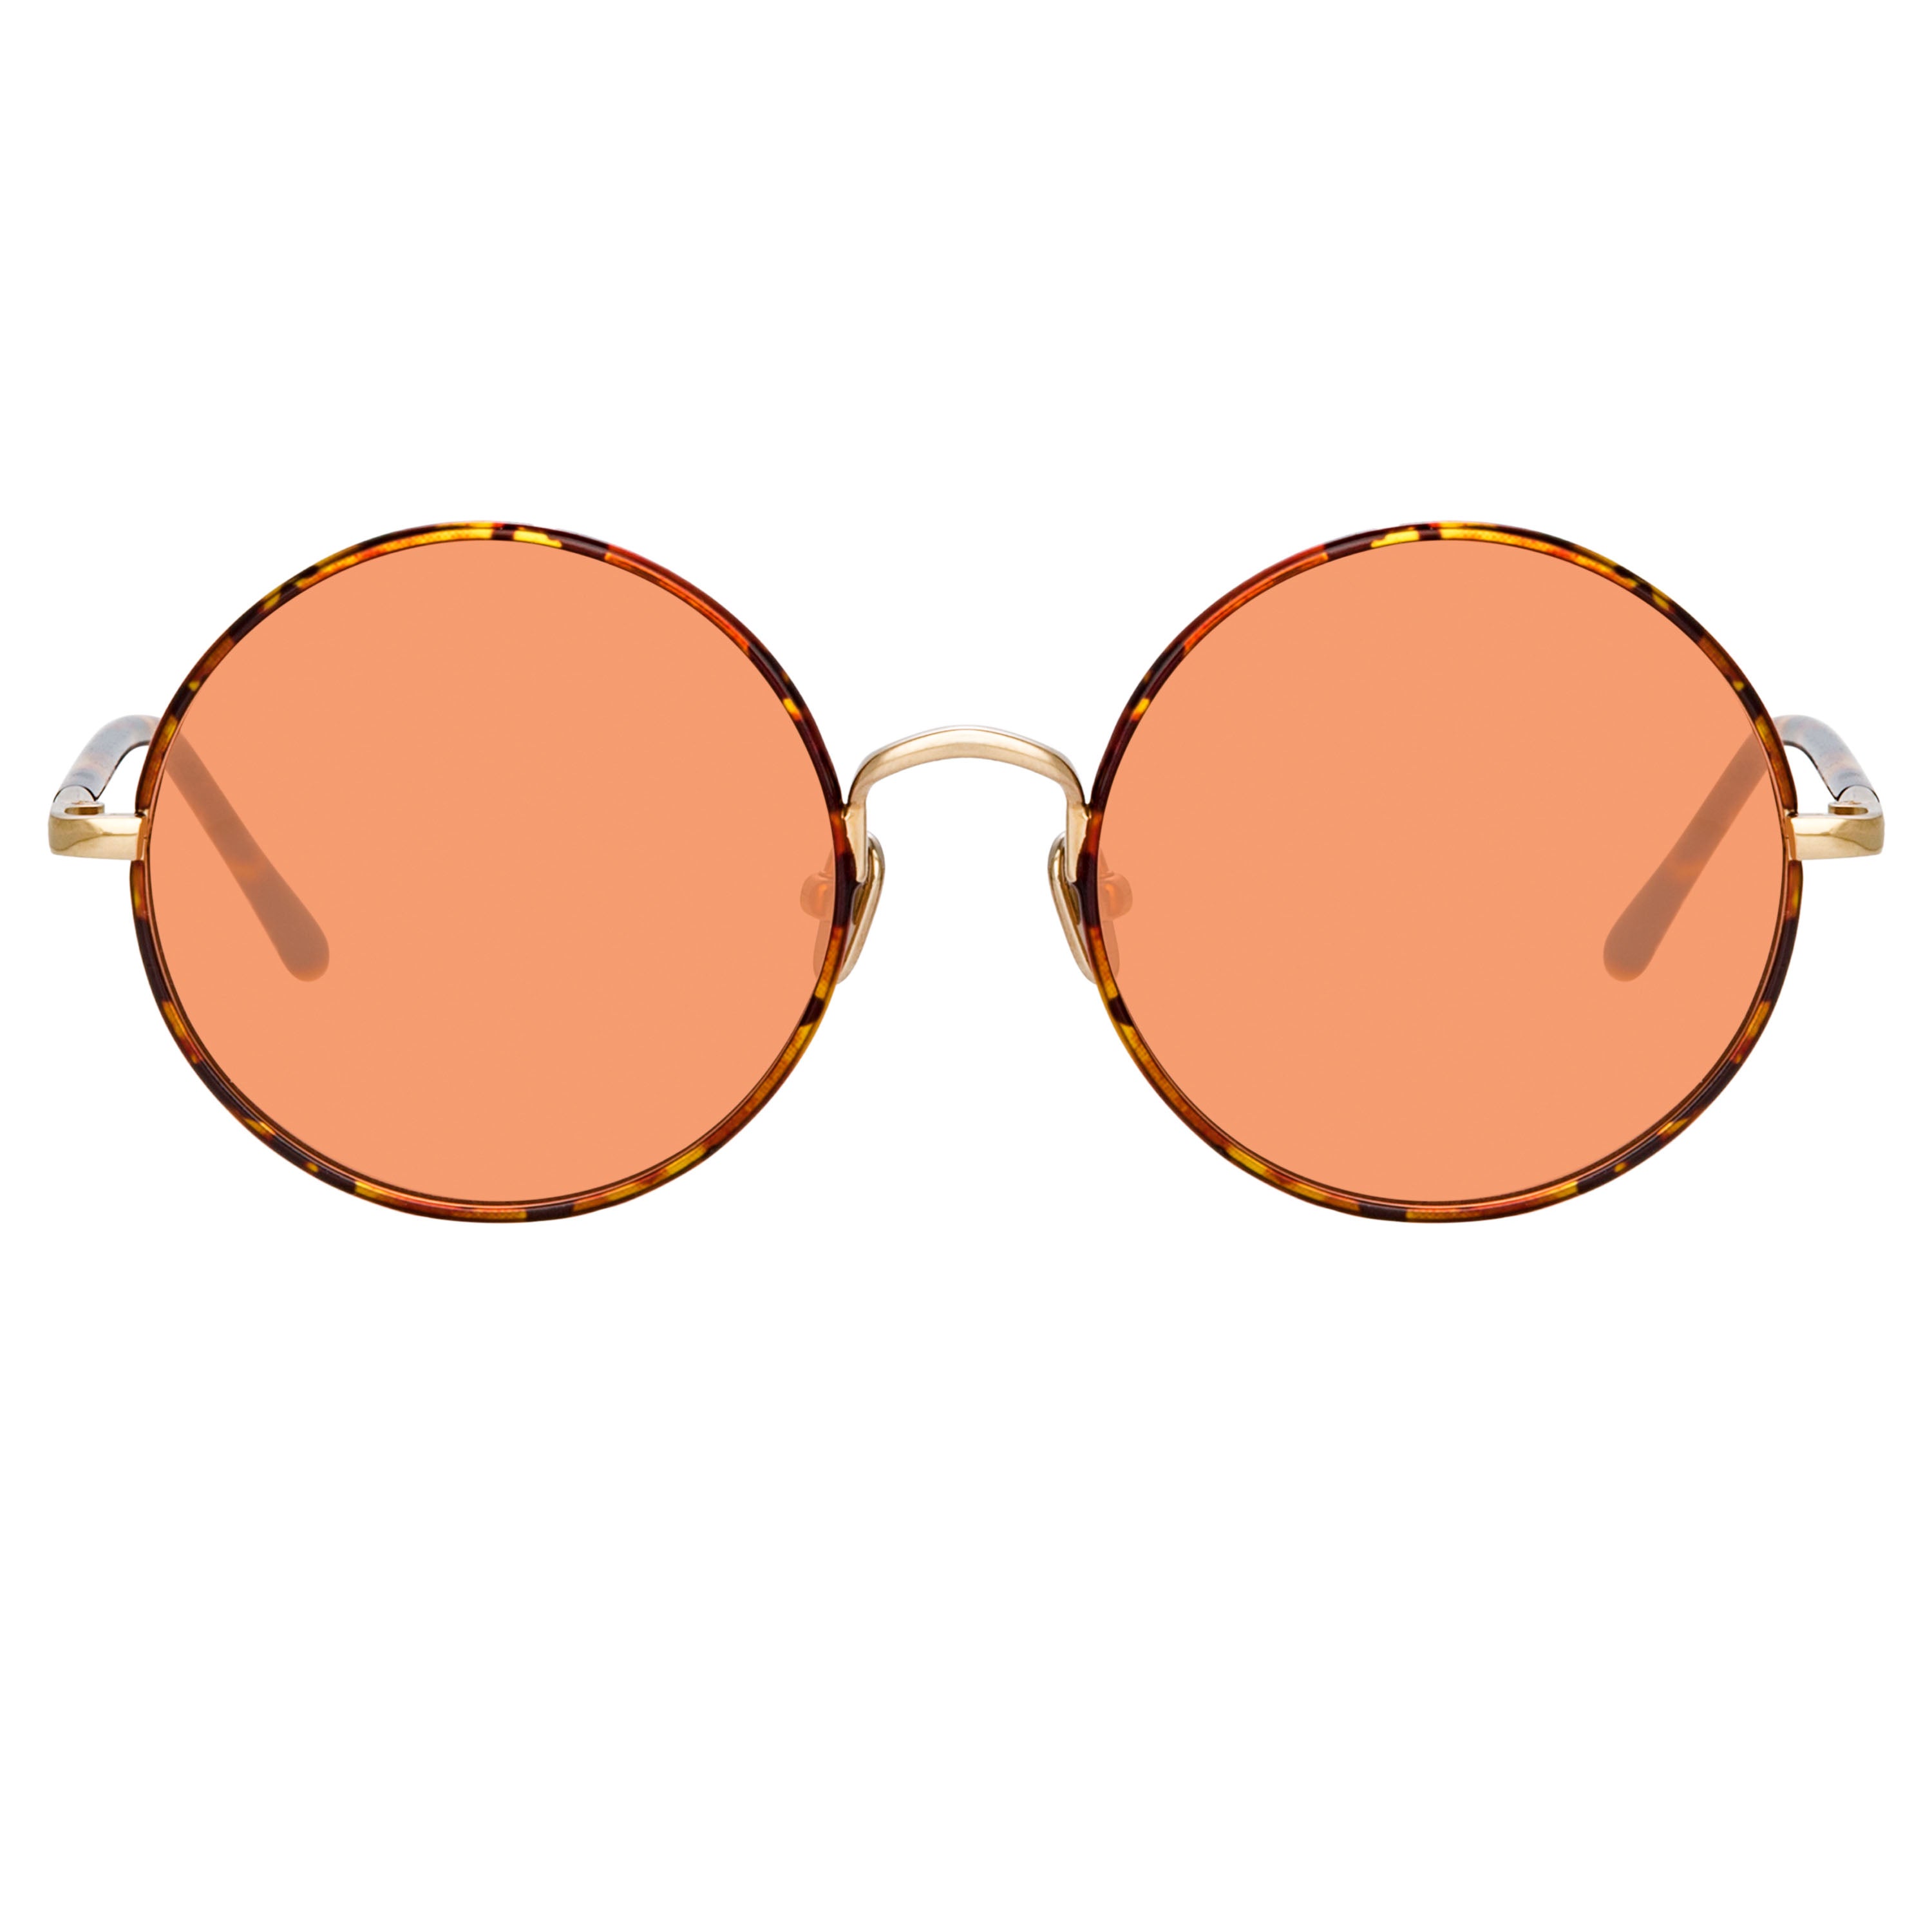 Linda Farrow - Welch Round Sunglasses in Tortoiseshell - Men - Adult - LFL983C4SUN